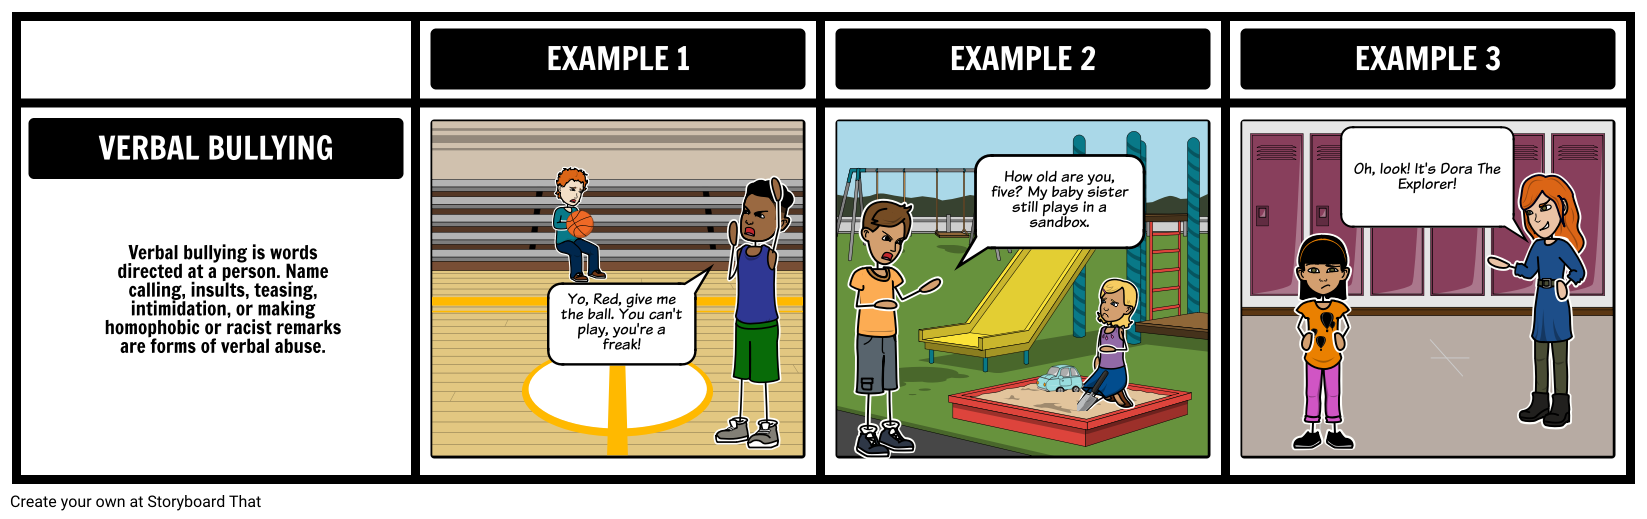 example-of-verbal-bullying-storyboard-by-rebeccaray